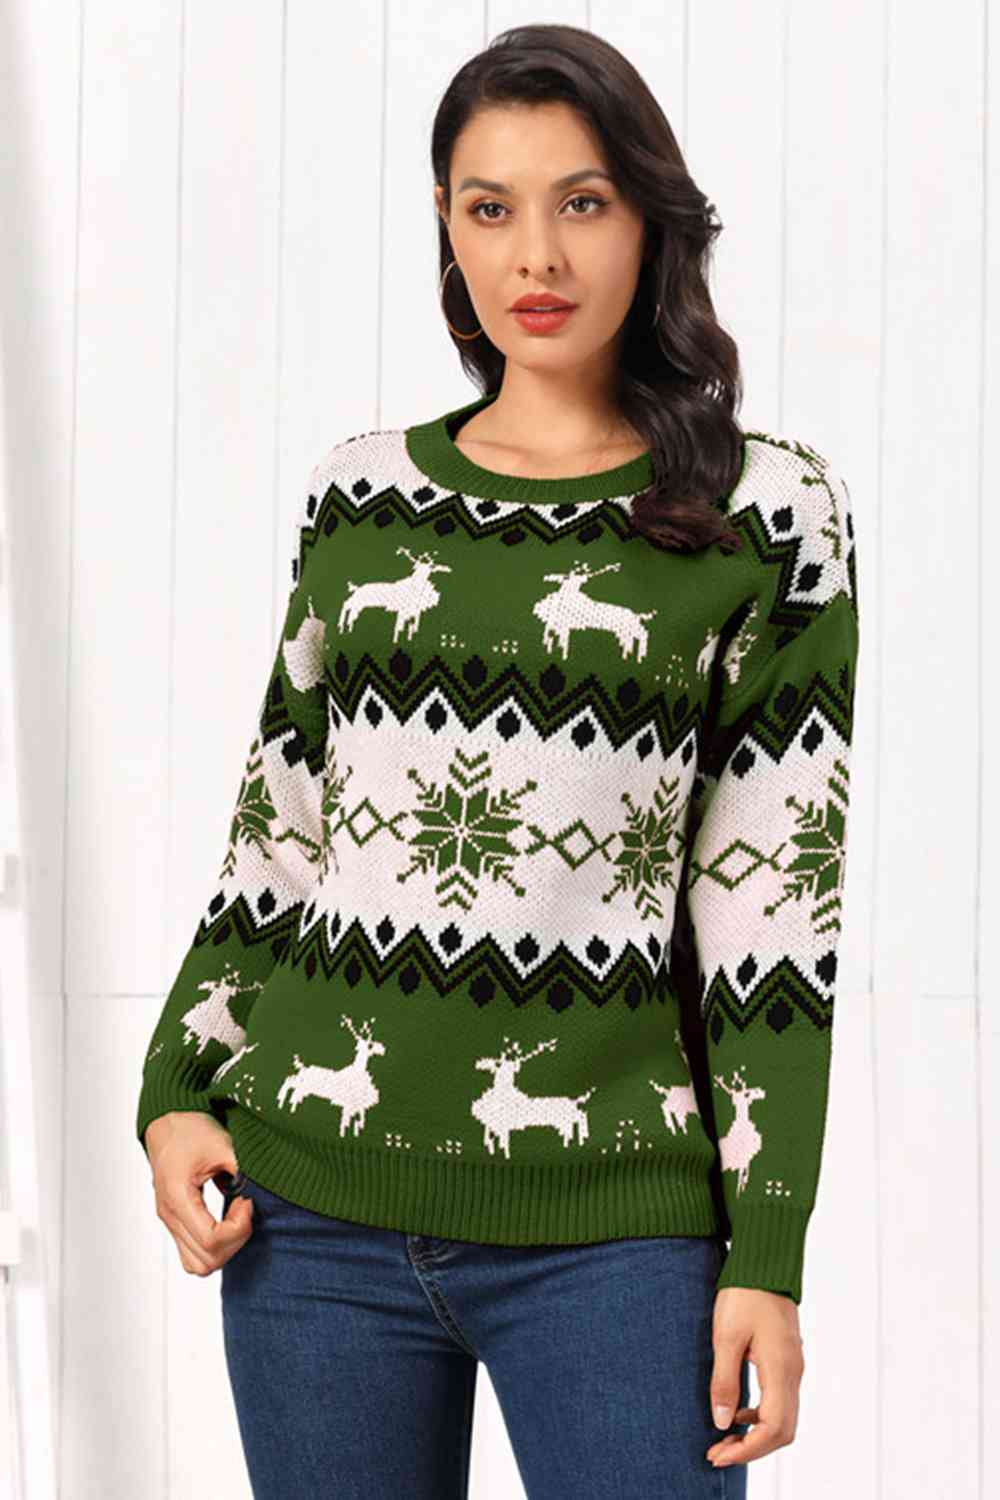 Snowflake Reindeer Fair Isle Knit Round Neck Classy Holiday Sweater Minimalist